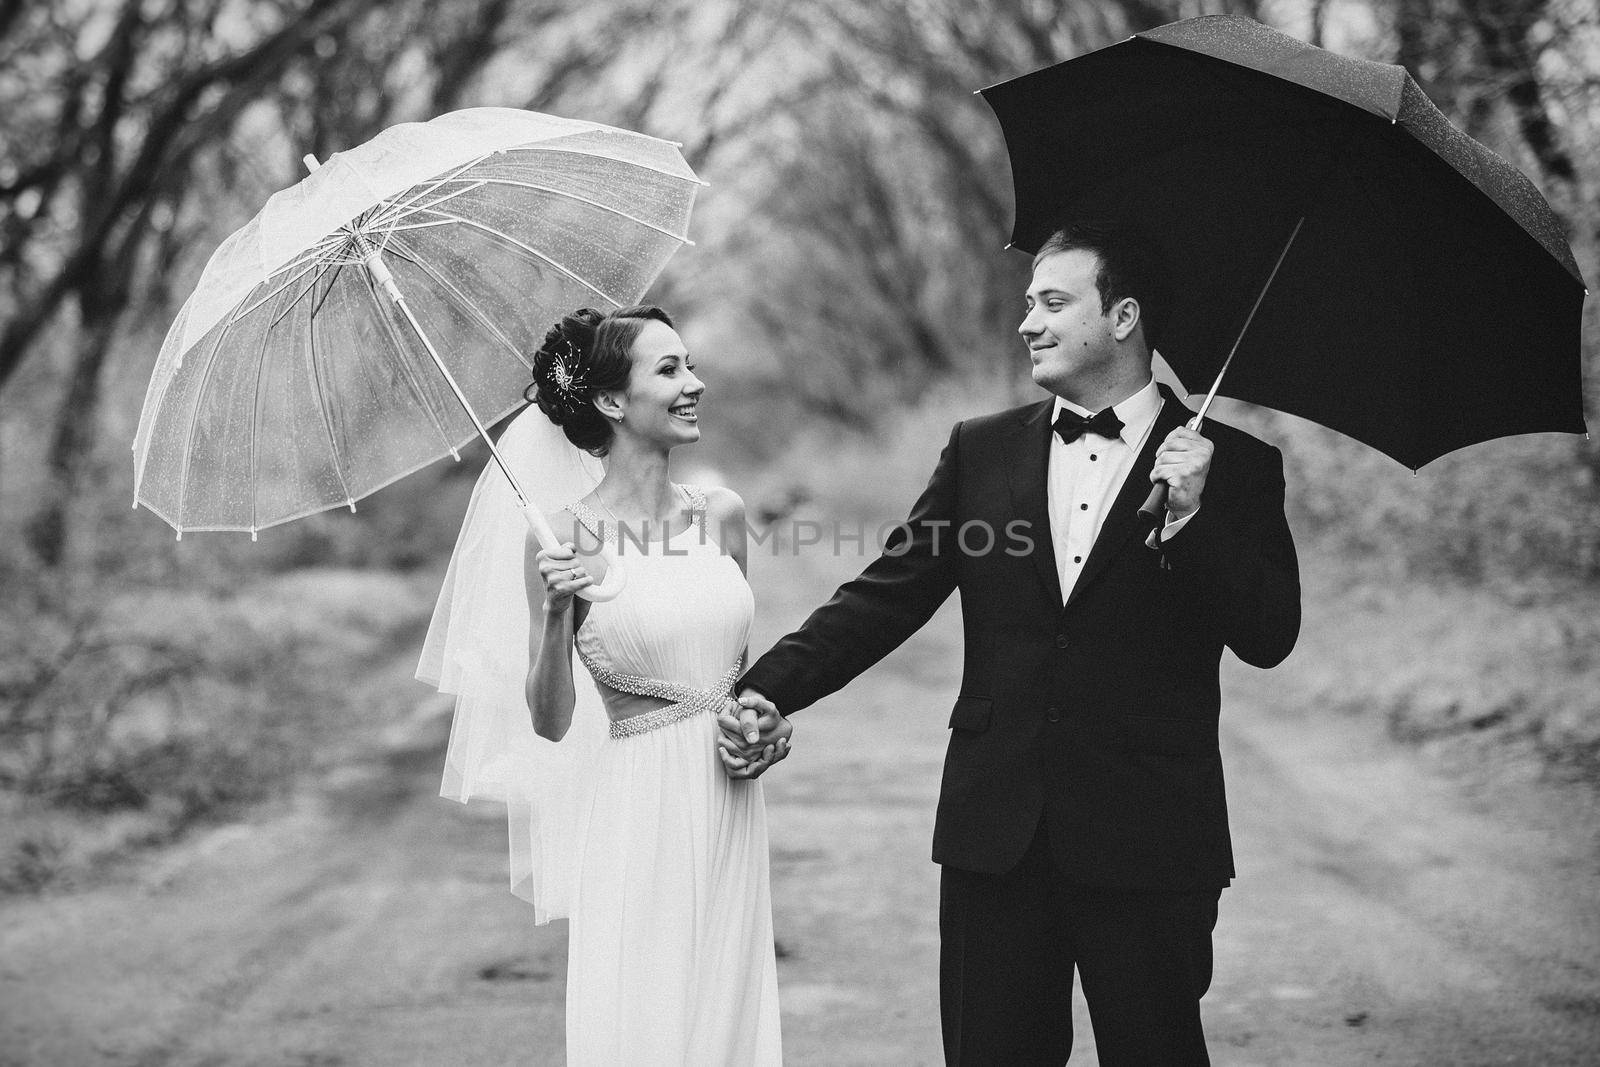 bride and groom on a rainy wedding day walking under an umbrella